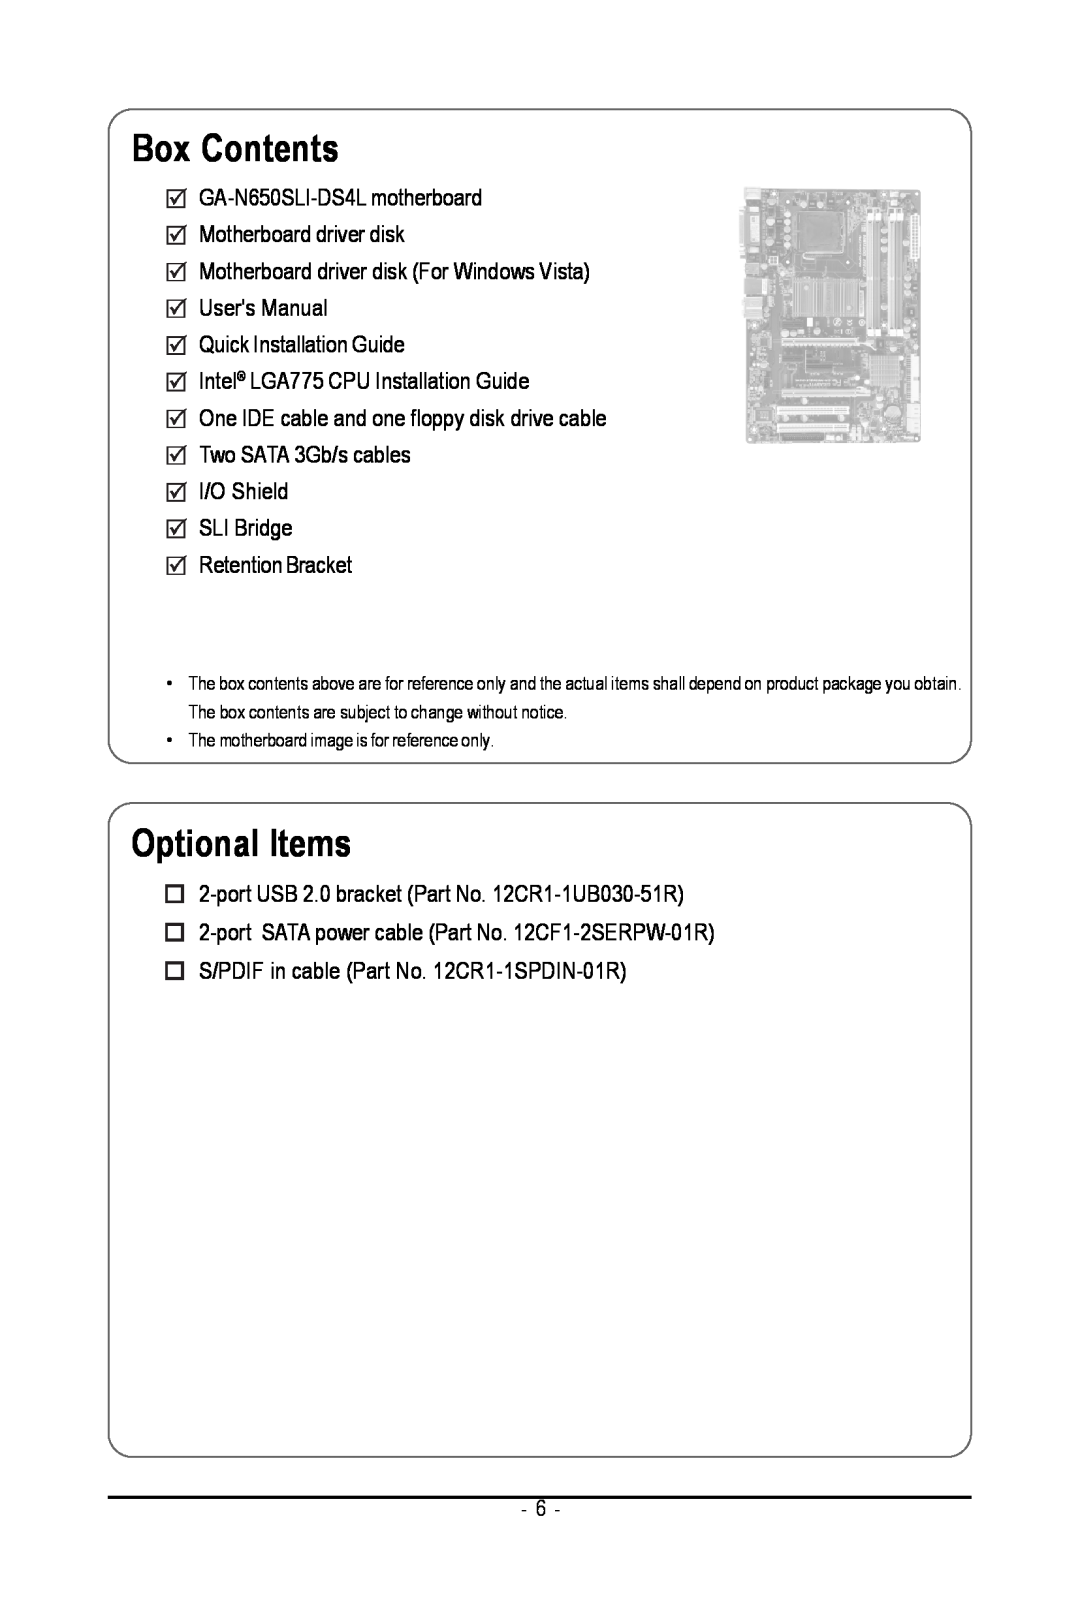 Intel GA-N650SLI-DS4L user manual Box Contents, Optional Items 